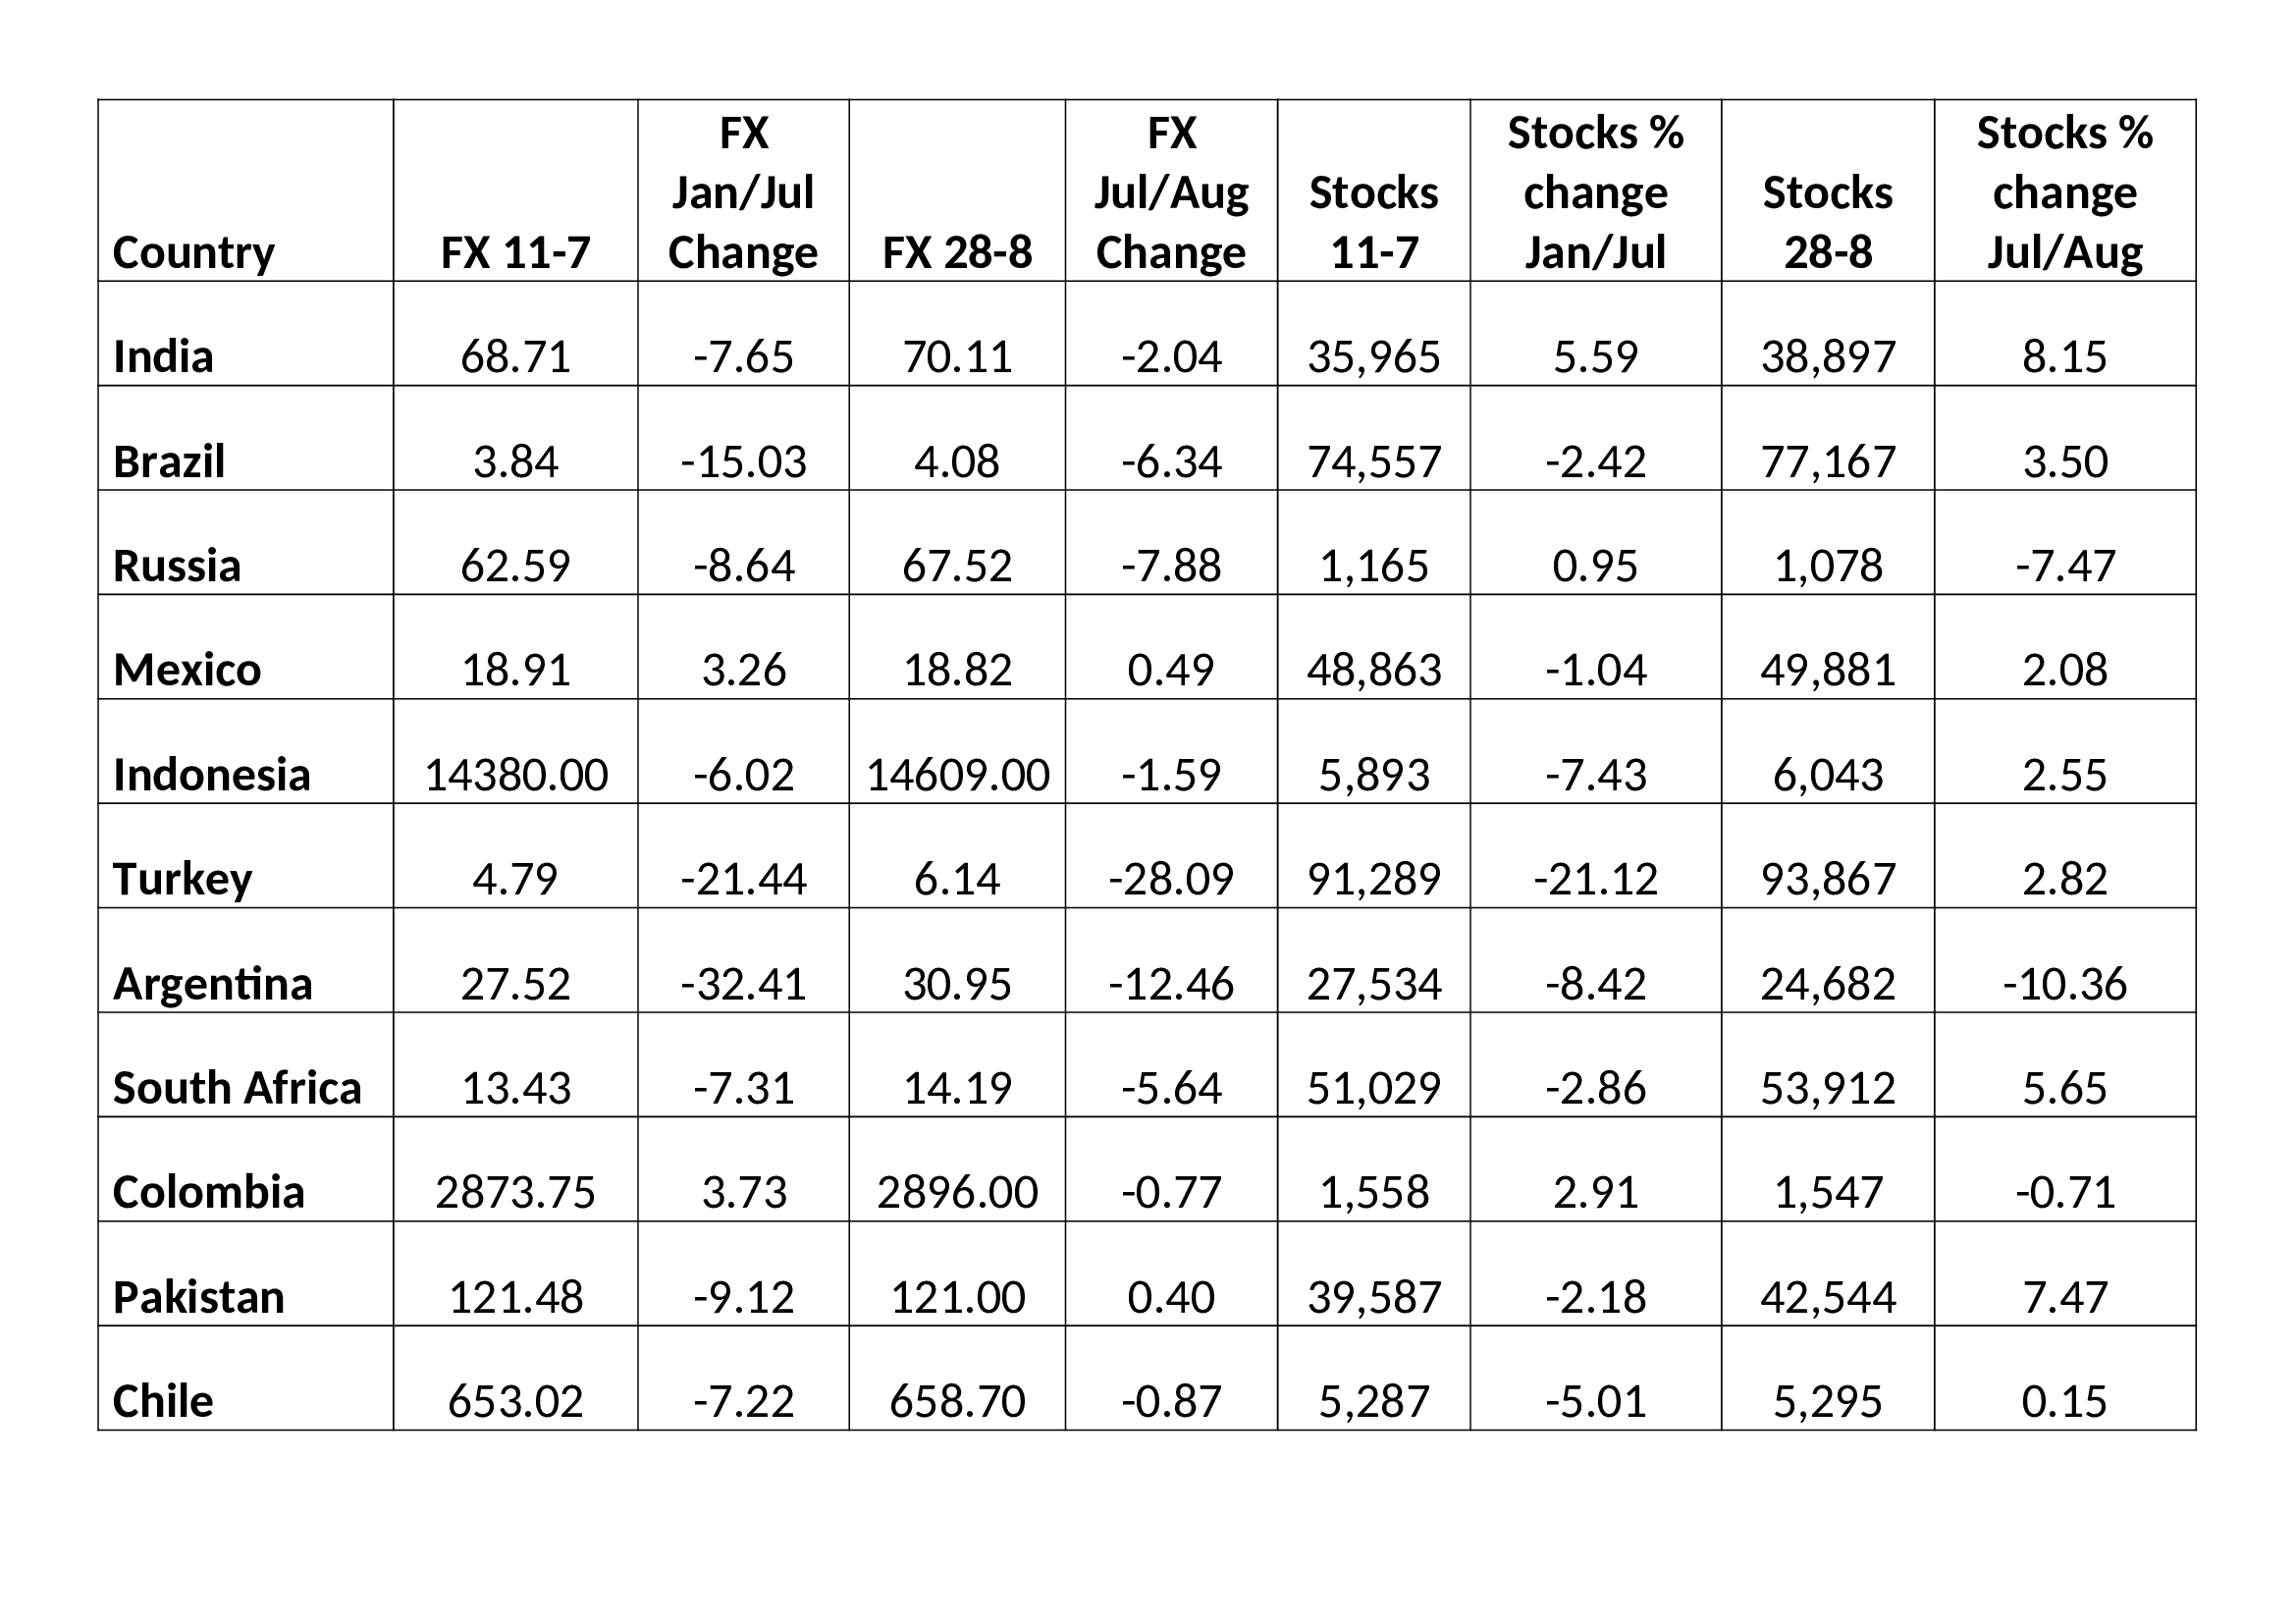 EM FX and stocks Jan-Jul and Jul-Aug 2018